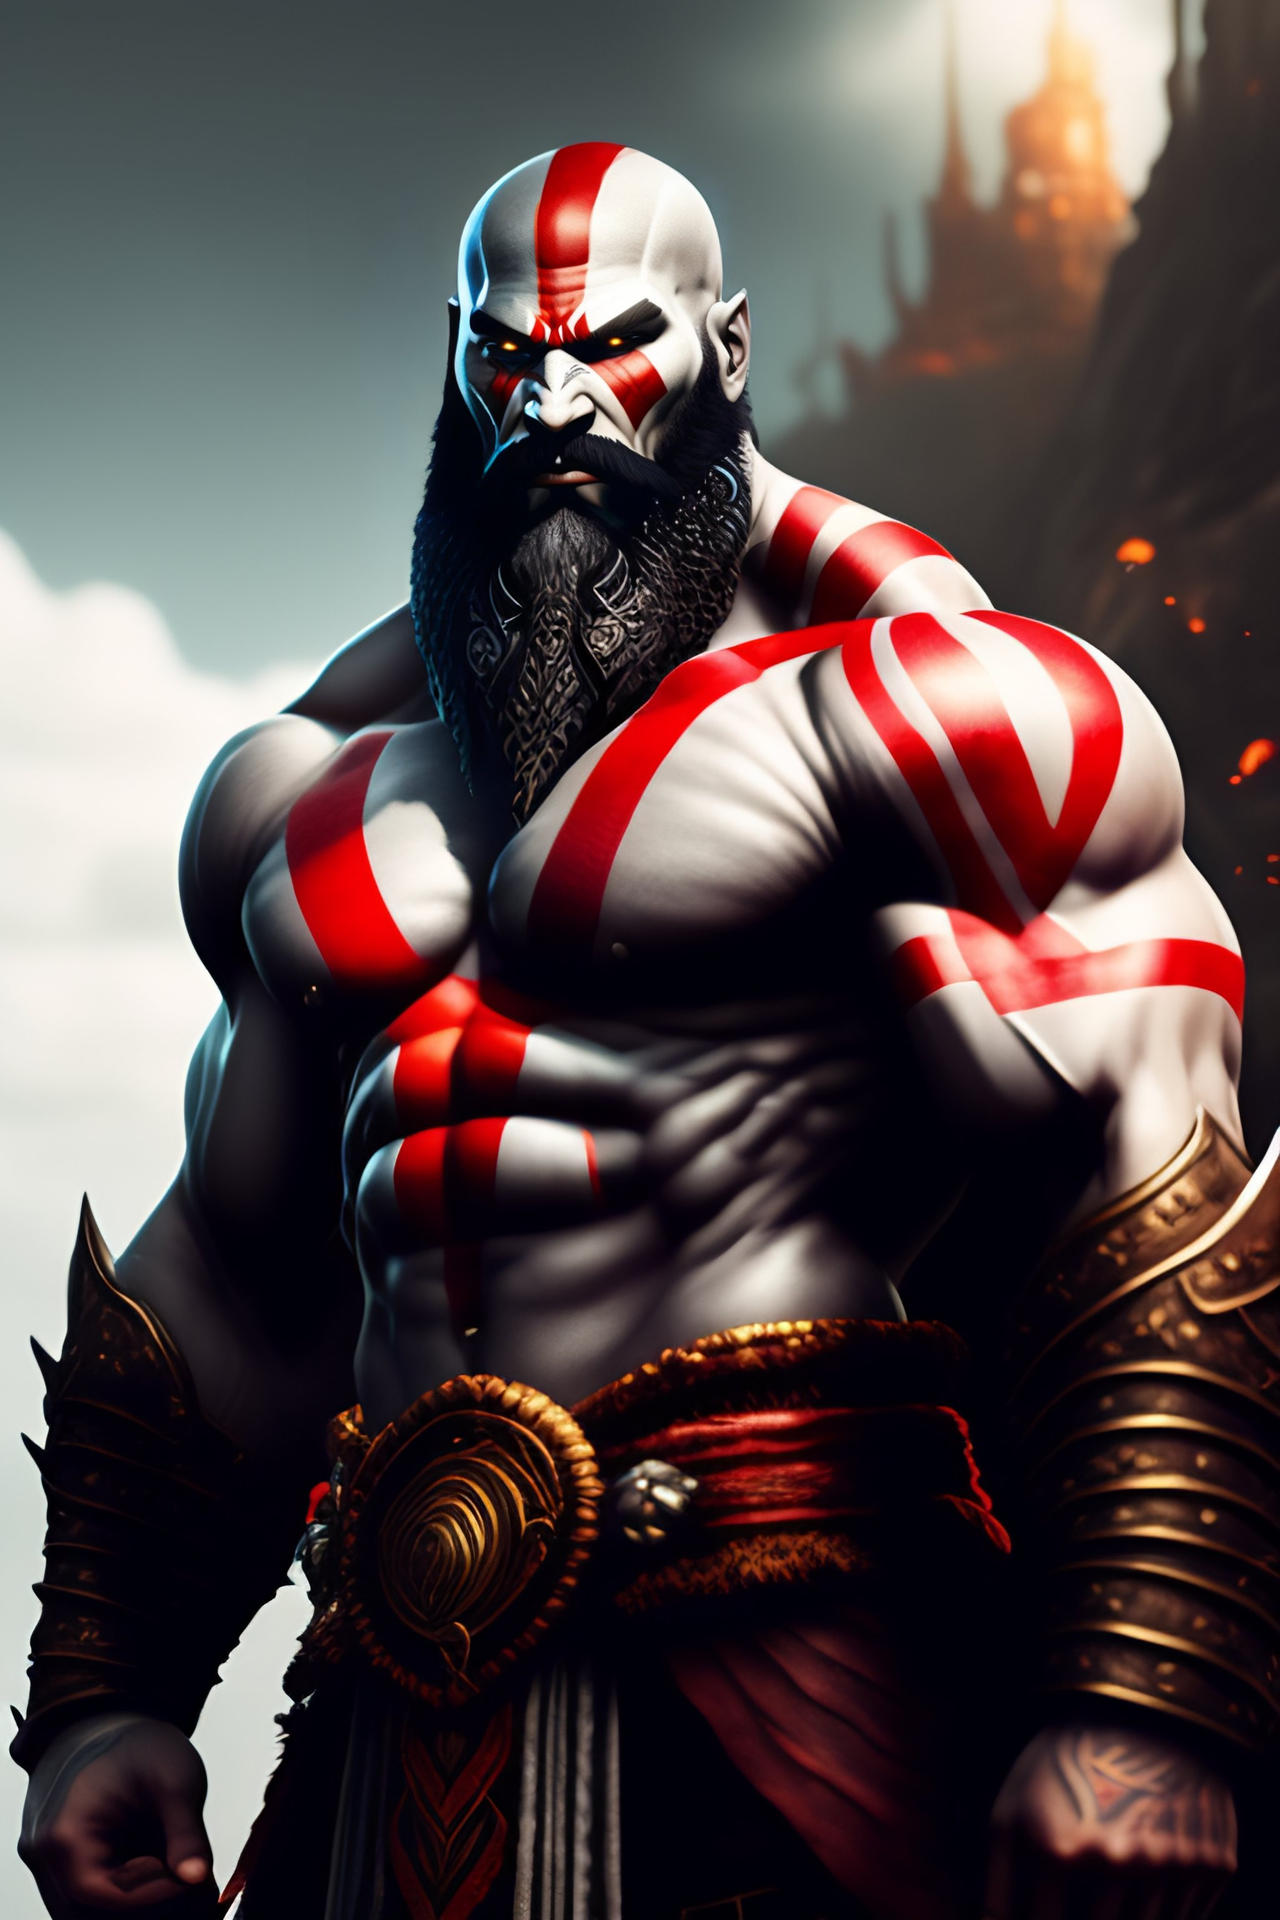 kratos___god_of_war_by_highrisemedia_dfntz7c-fullview.jpg